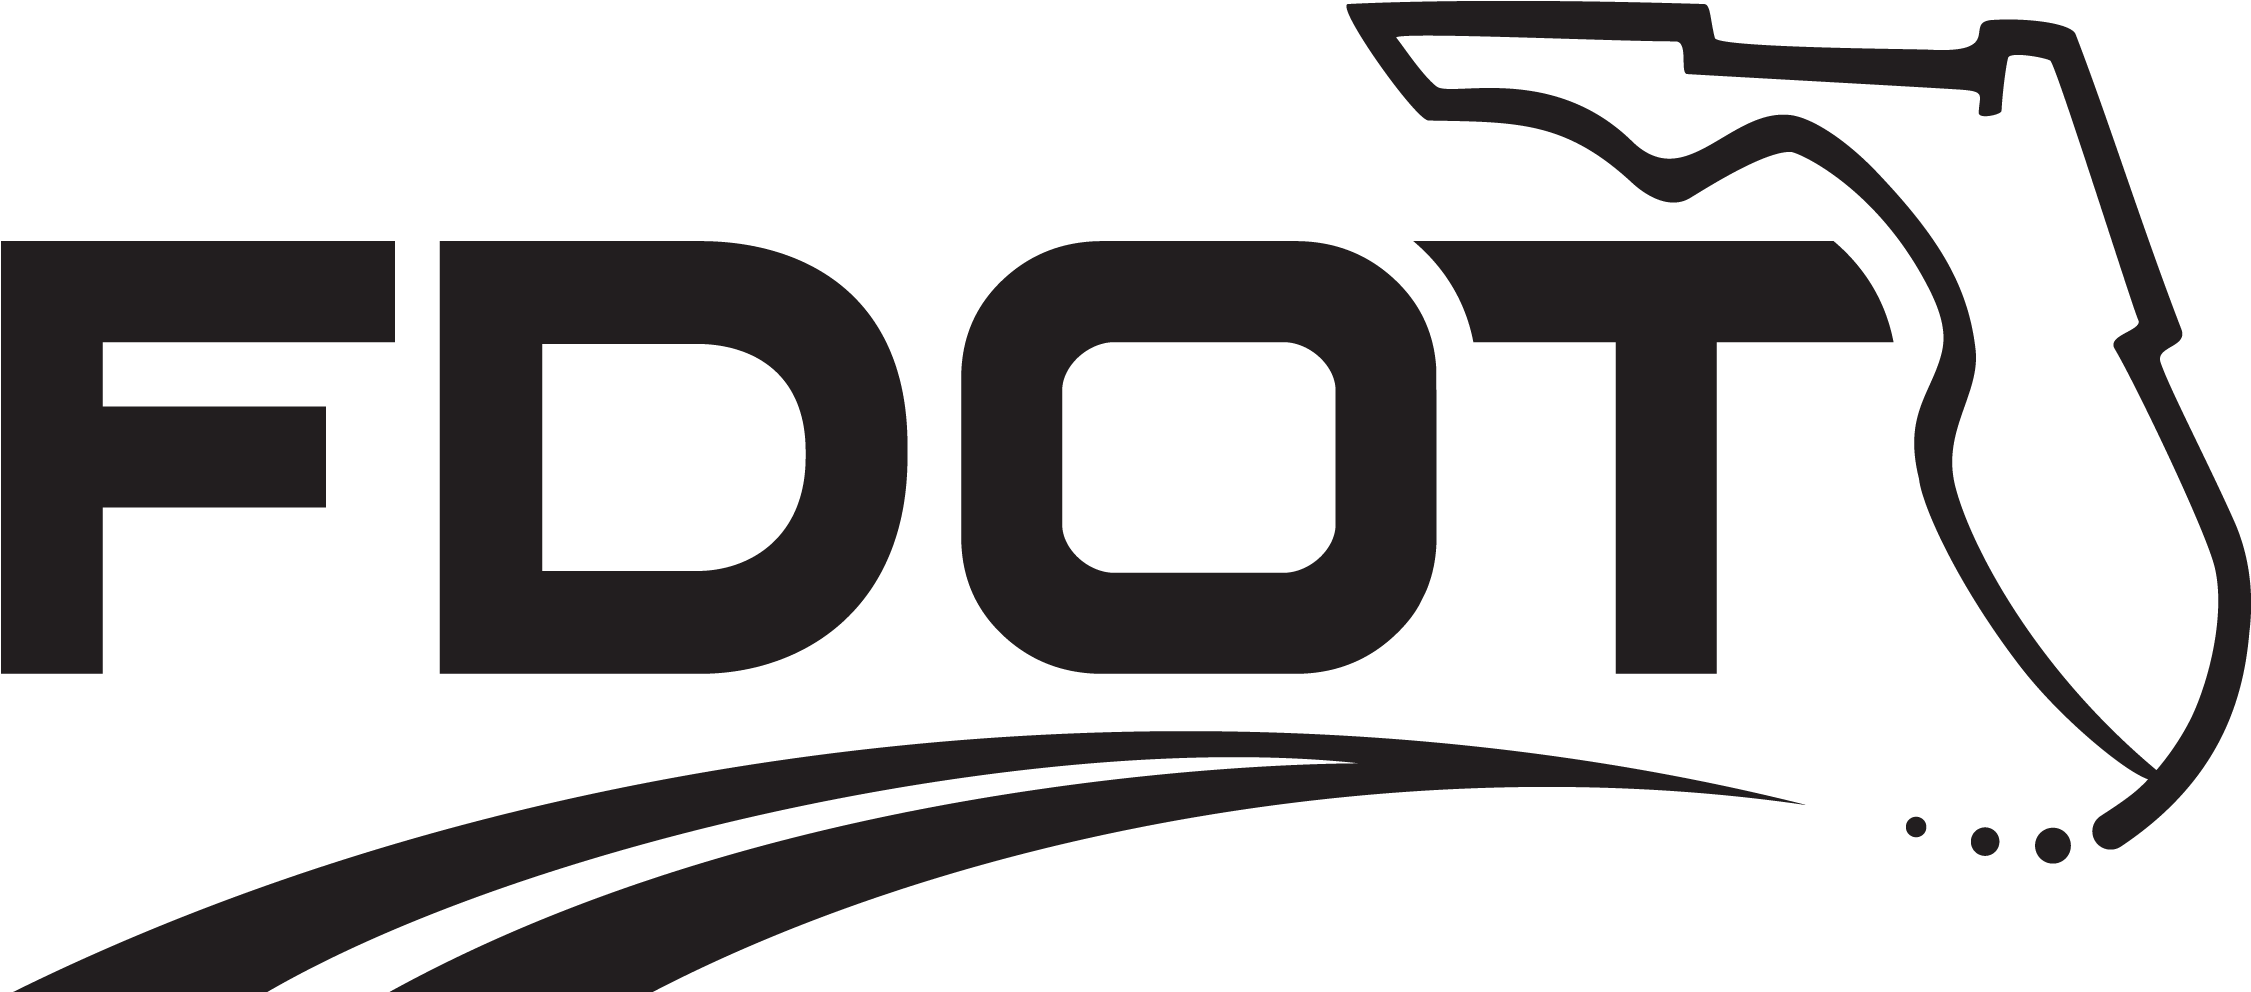 Logo With Transparent Background - Florida Department Of Transportation (2400x1200)